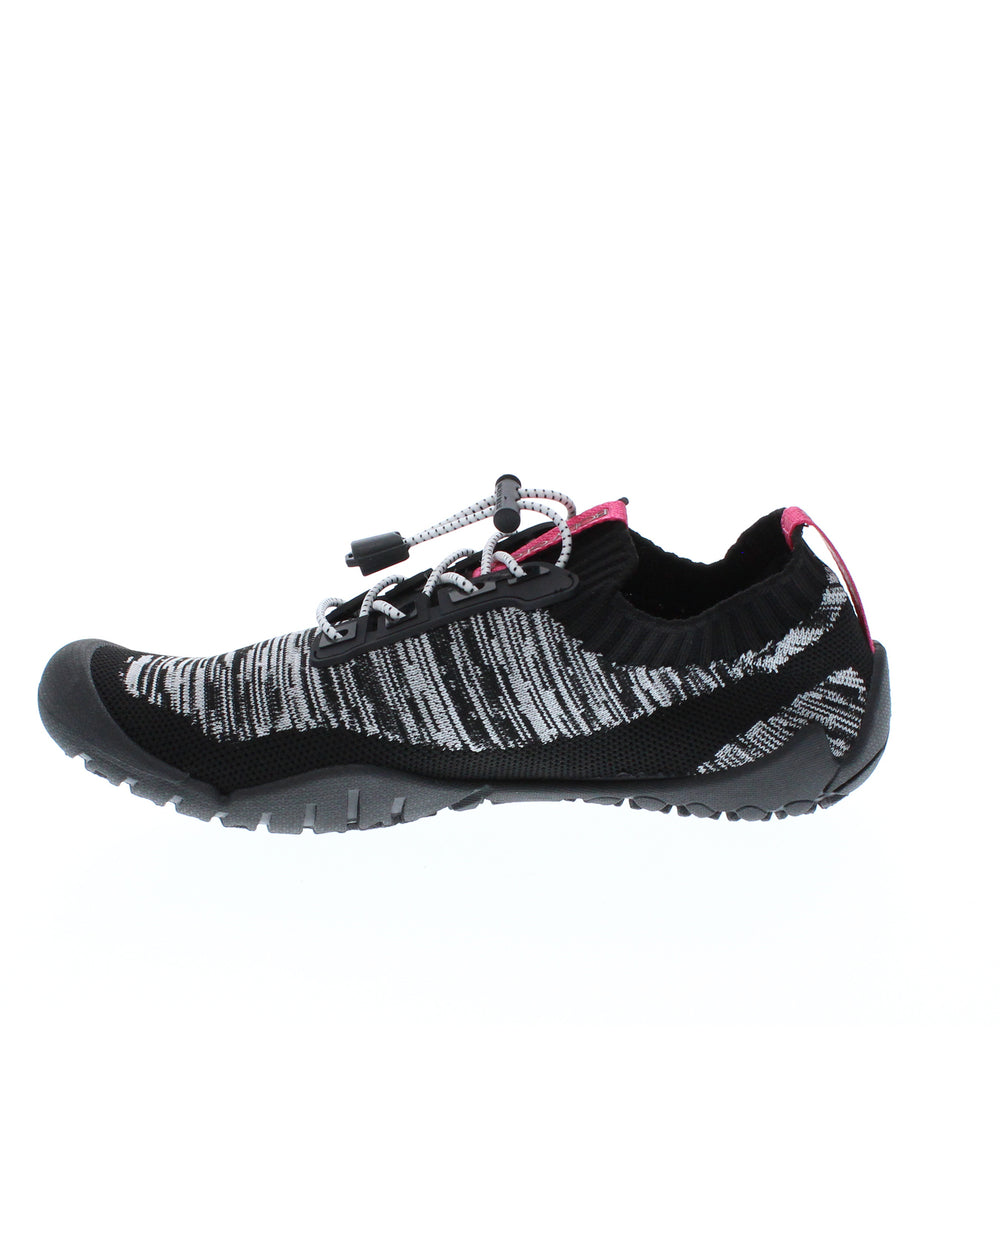 Women's Hydro Knit Siphon Water Shoes - Black/Fuschia